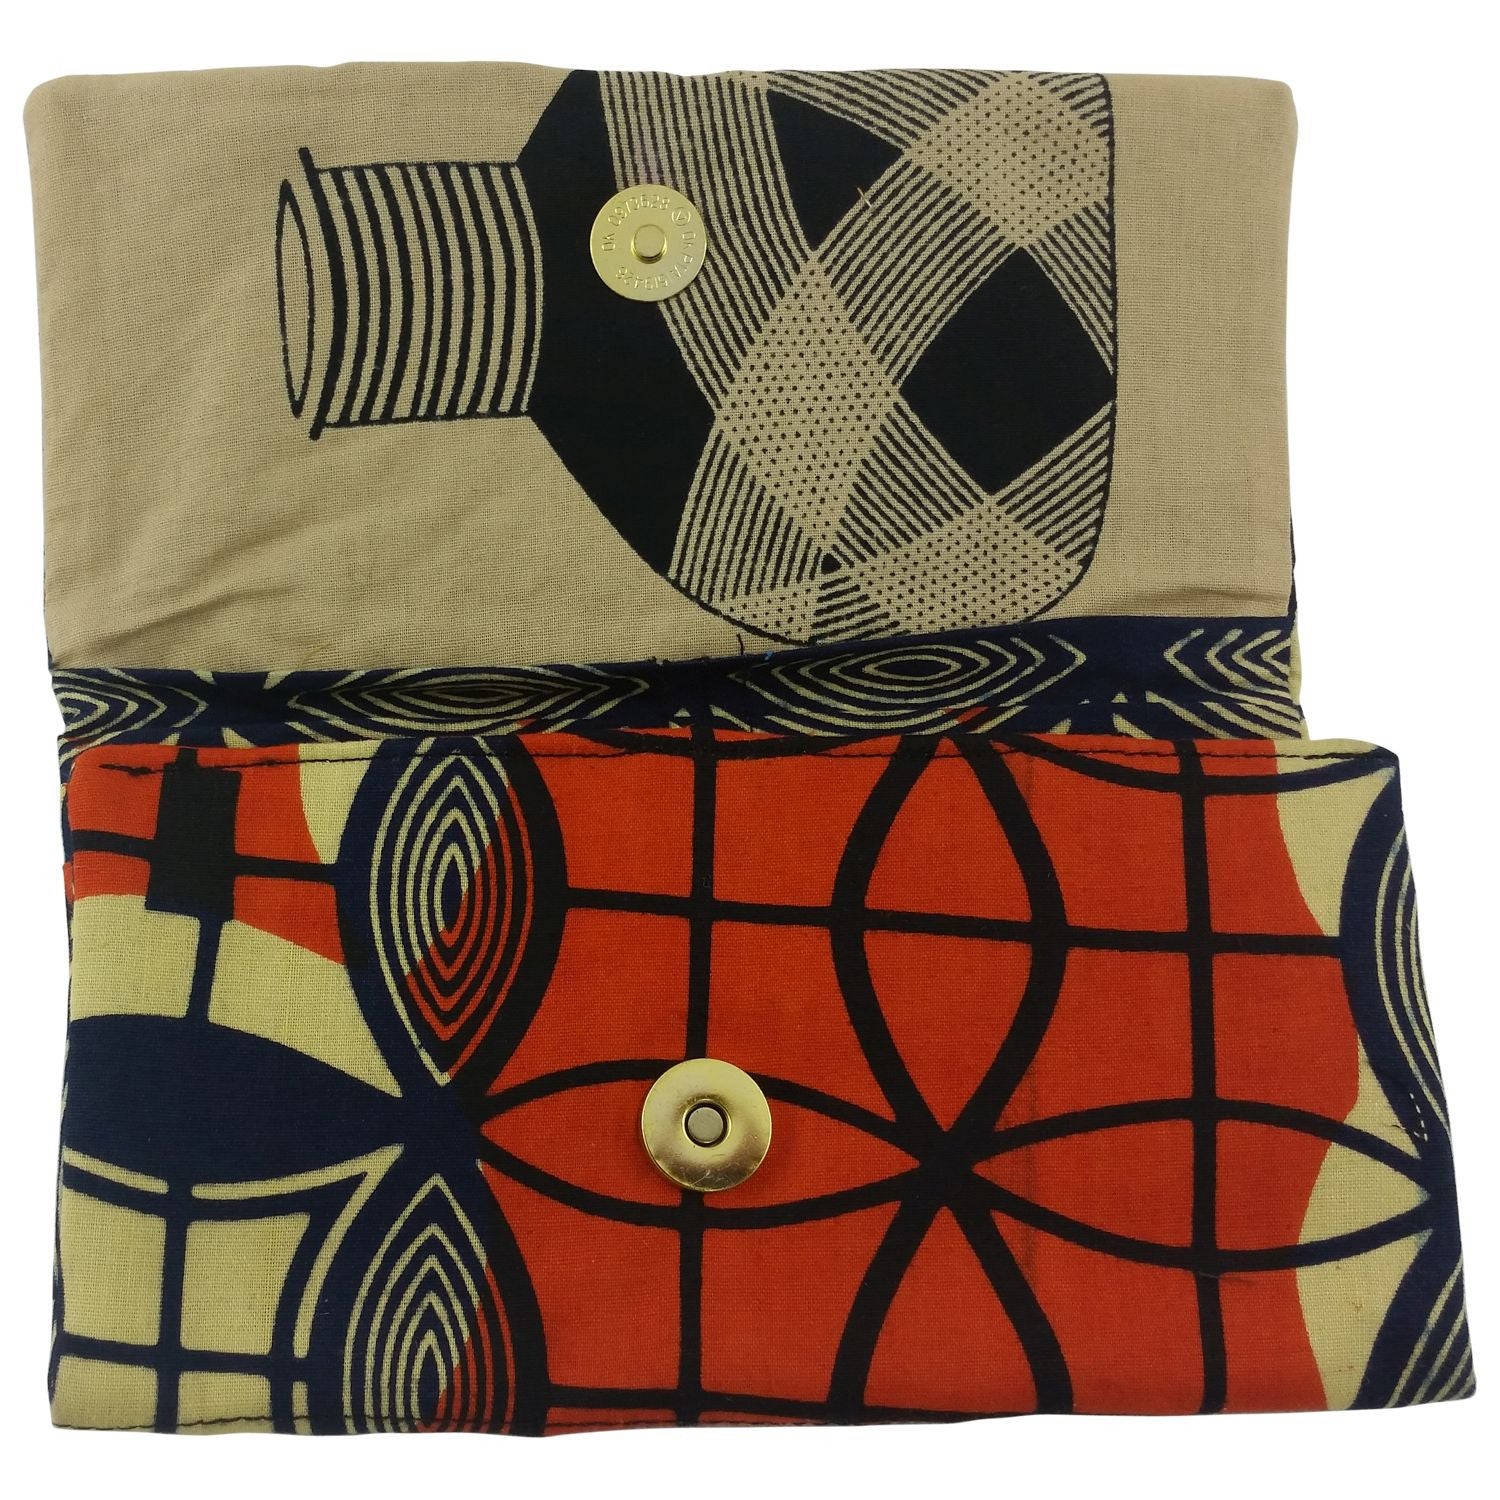 2 of 4: East African Kitenge Fabric Women's Wallet (Beige,Orange and Blue)